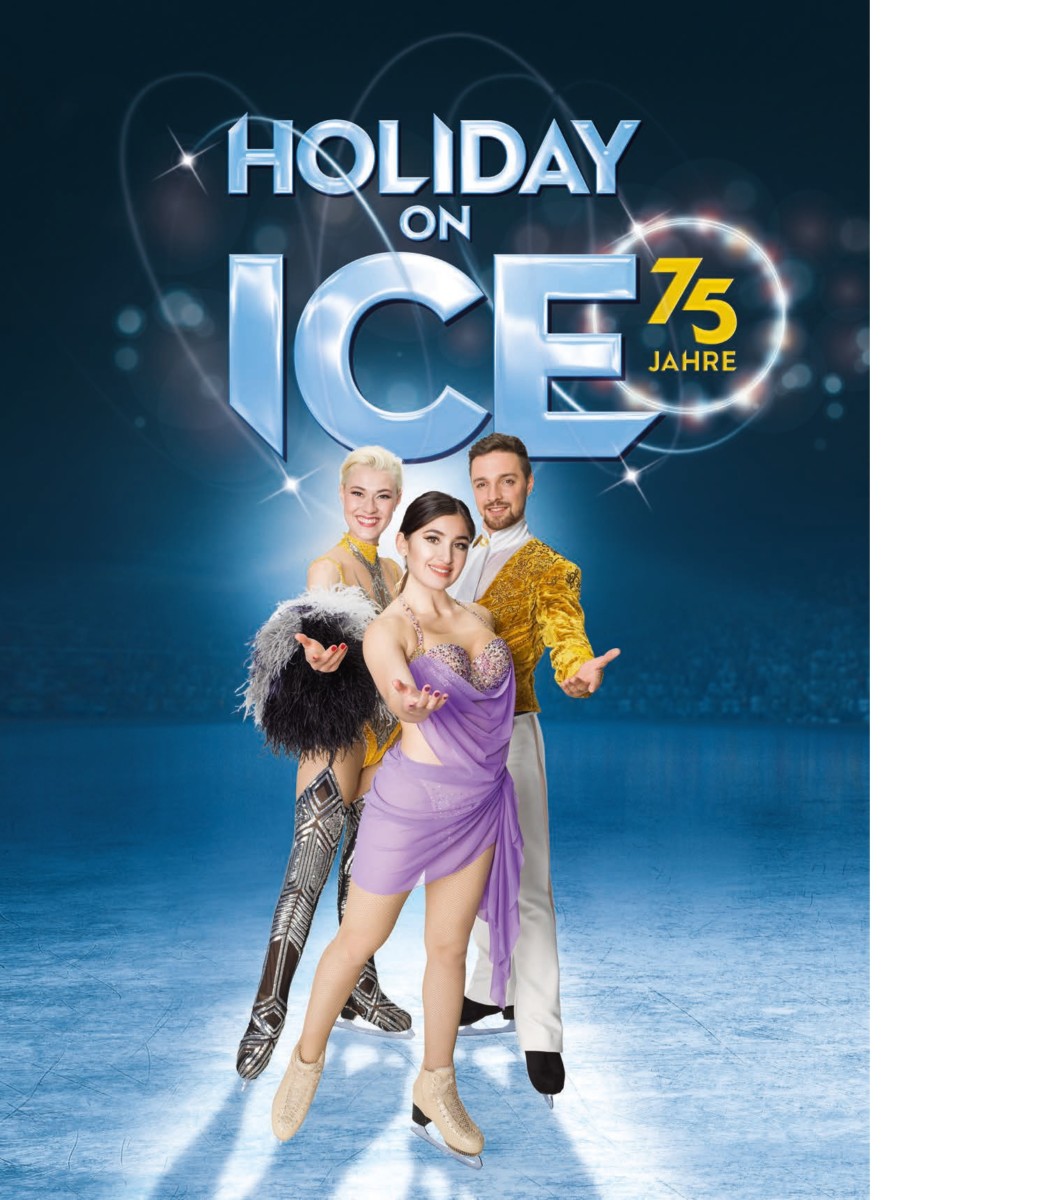 Holiday on Ice - New Show 75 Jahre - Union Reiseteam 